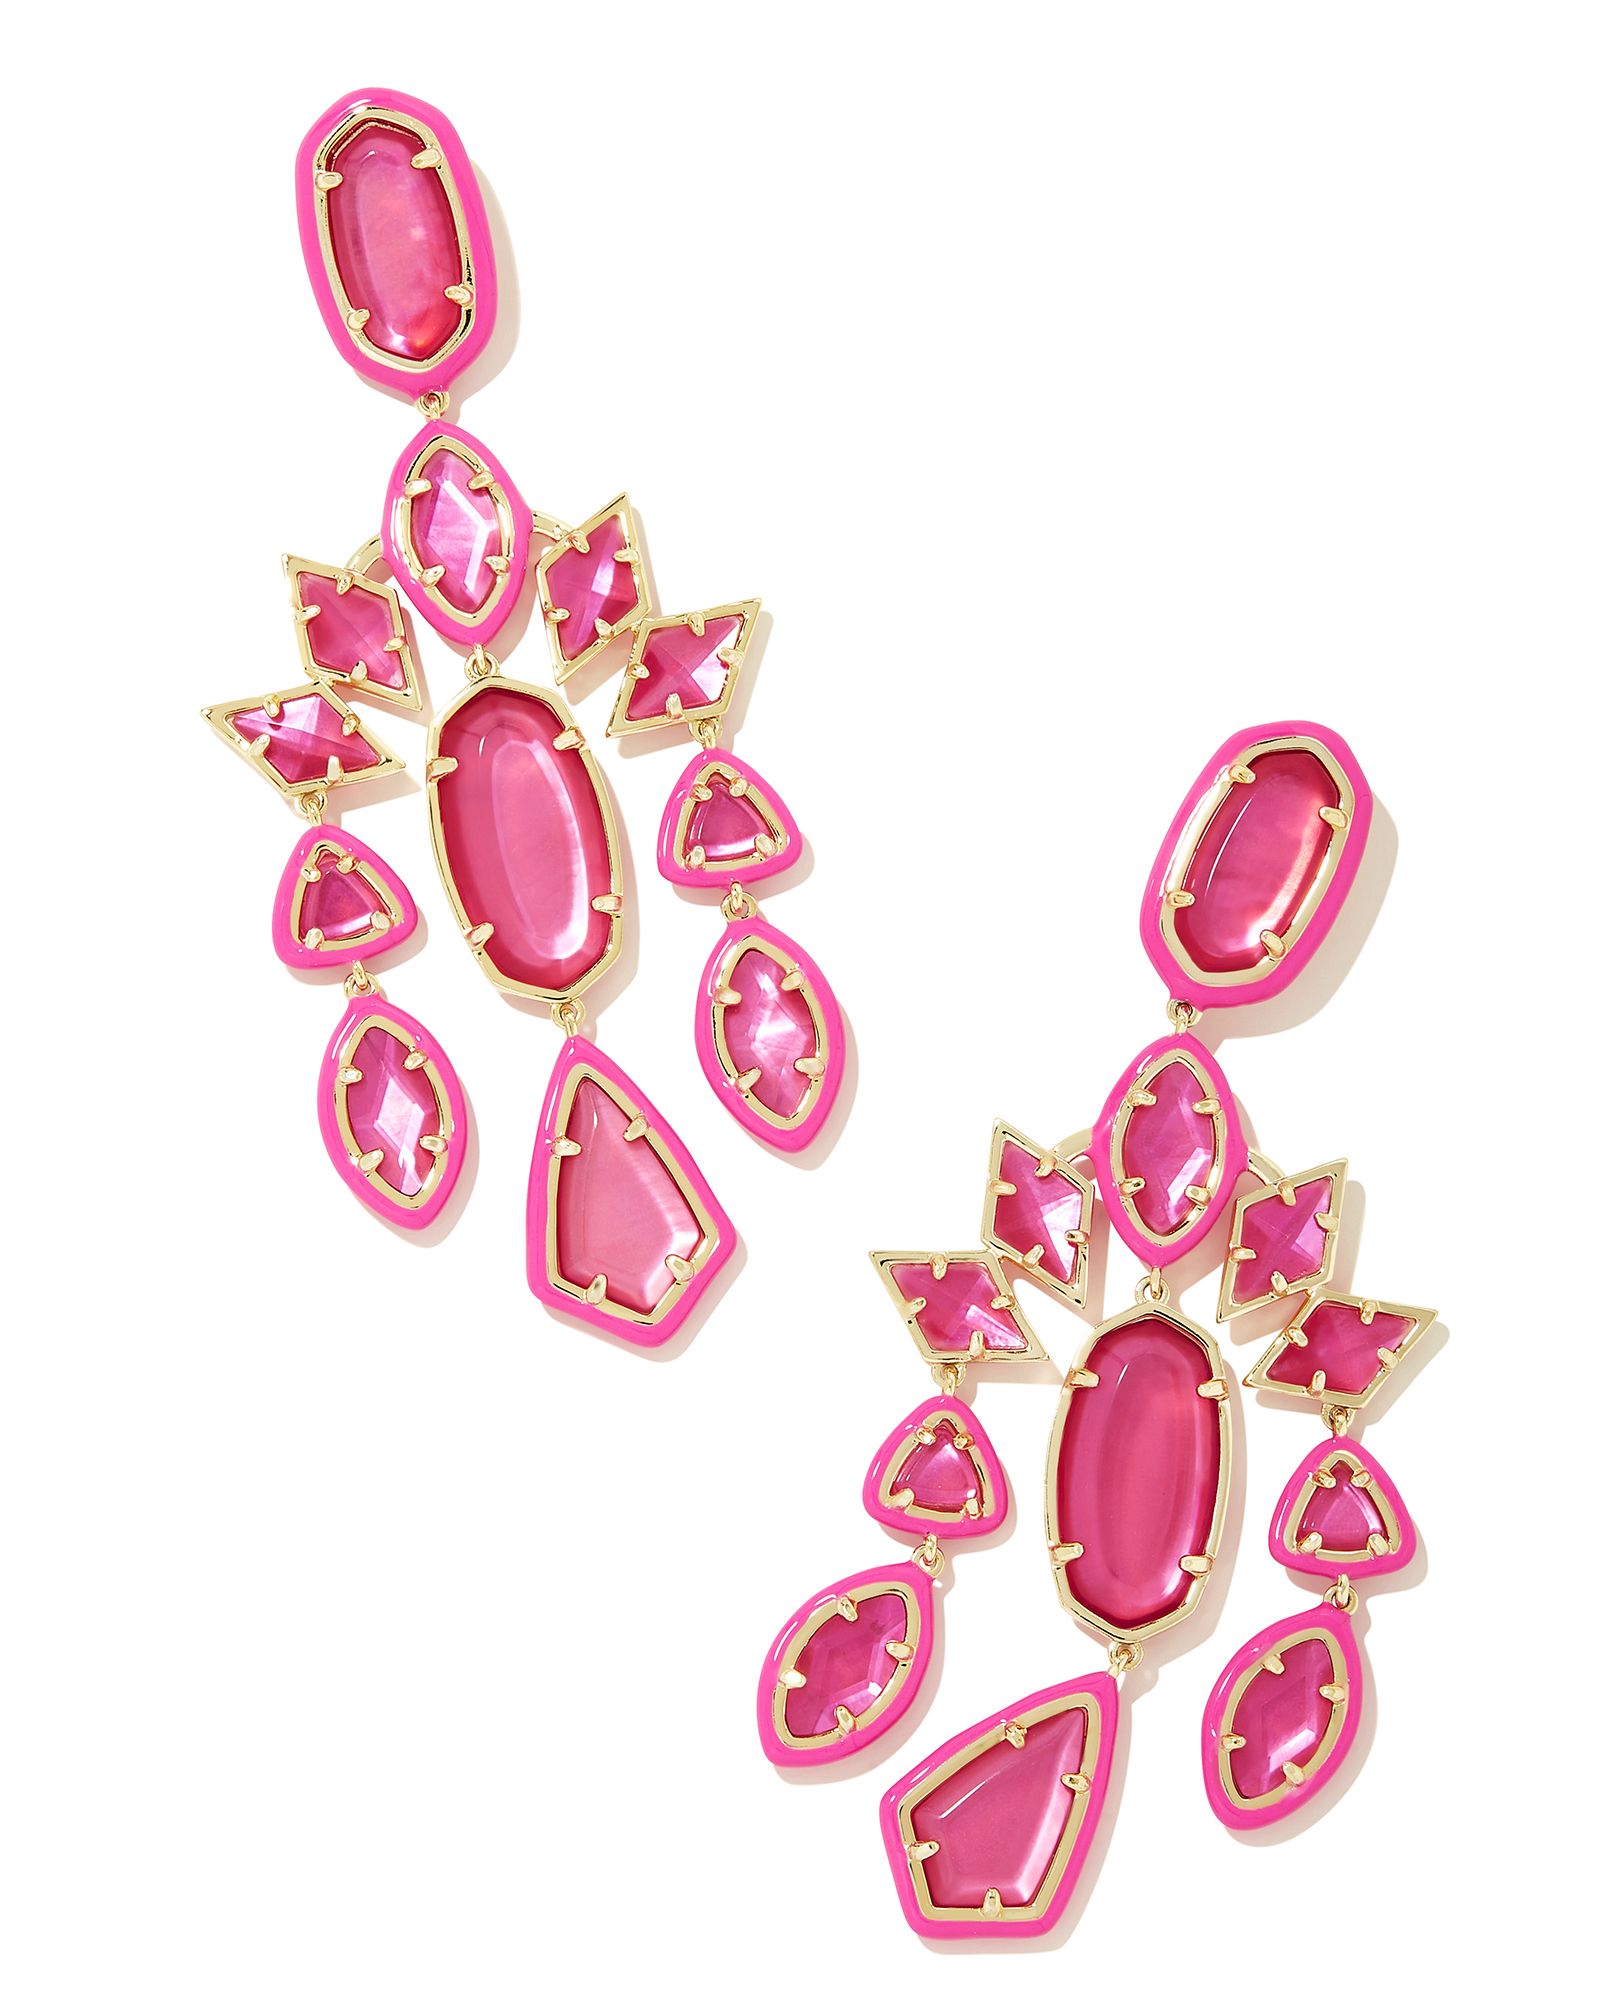 Greta Gold Statement Earrings in Pink Mix | Kendra Scott